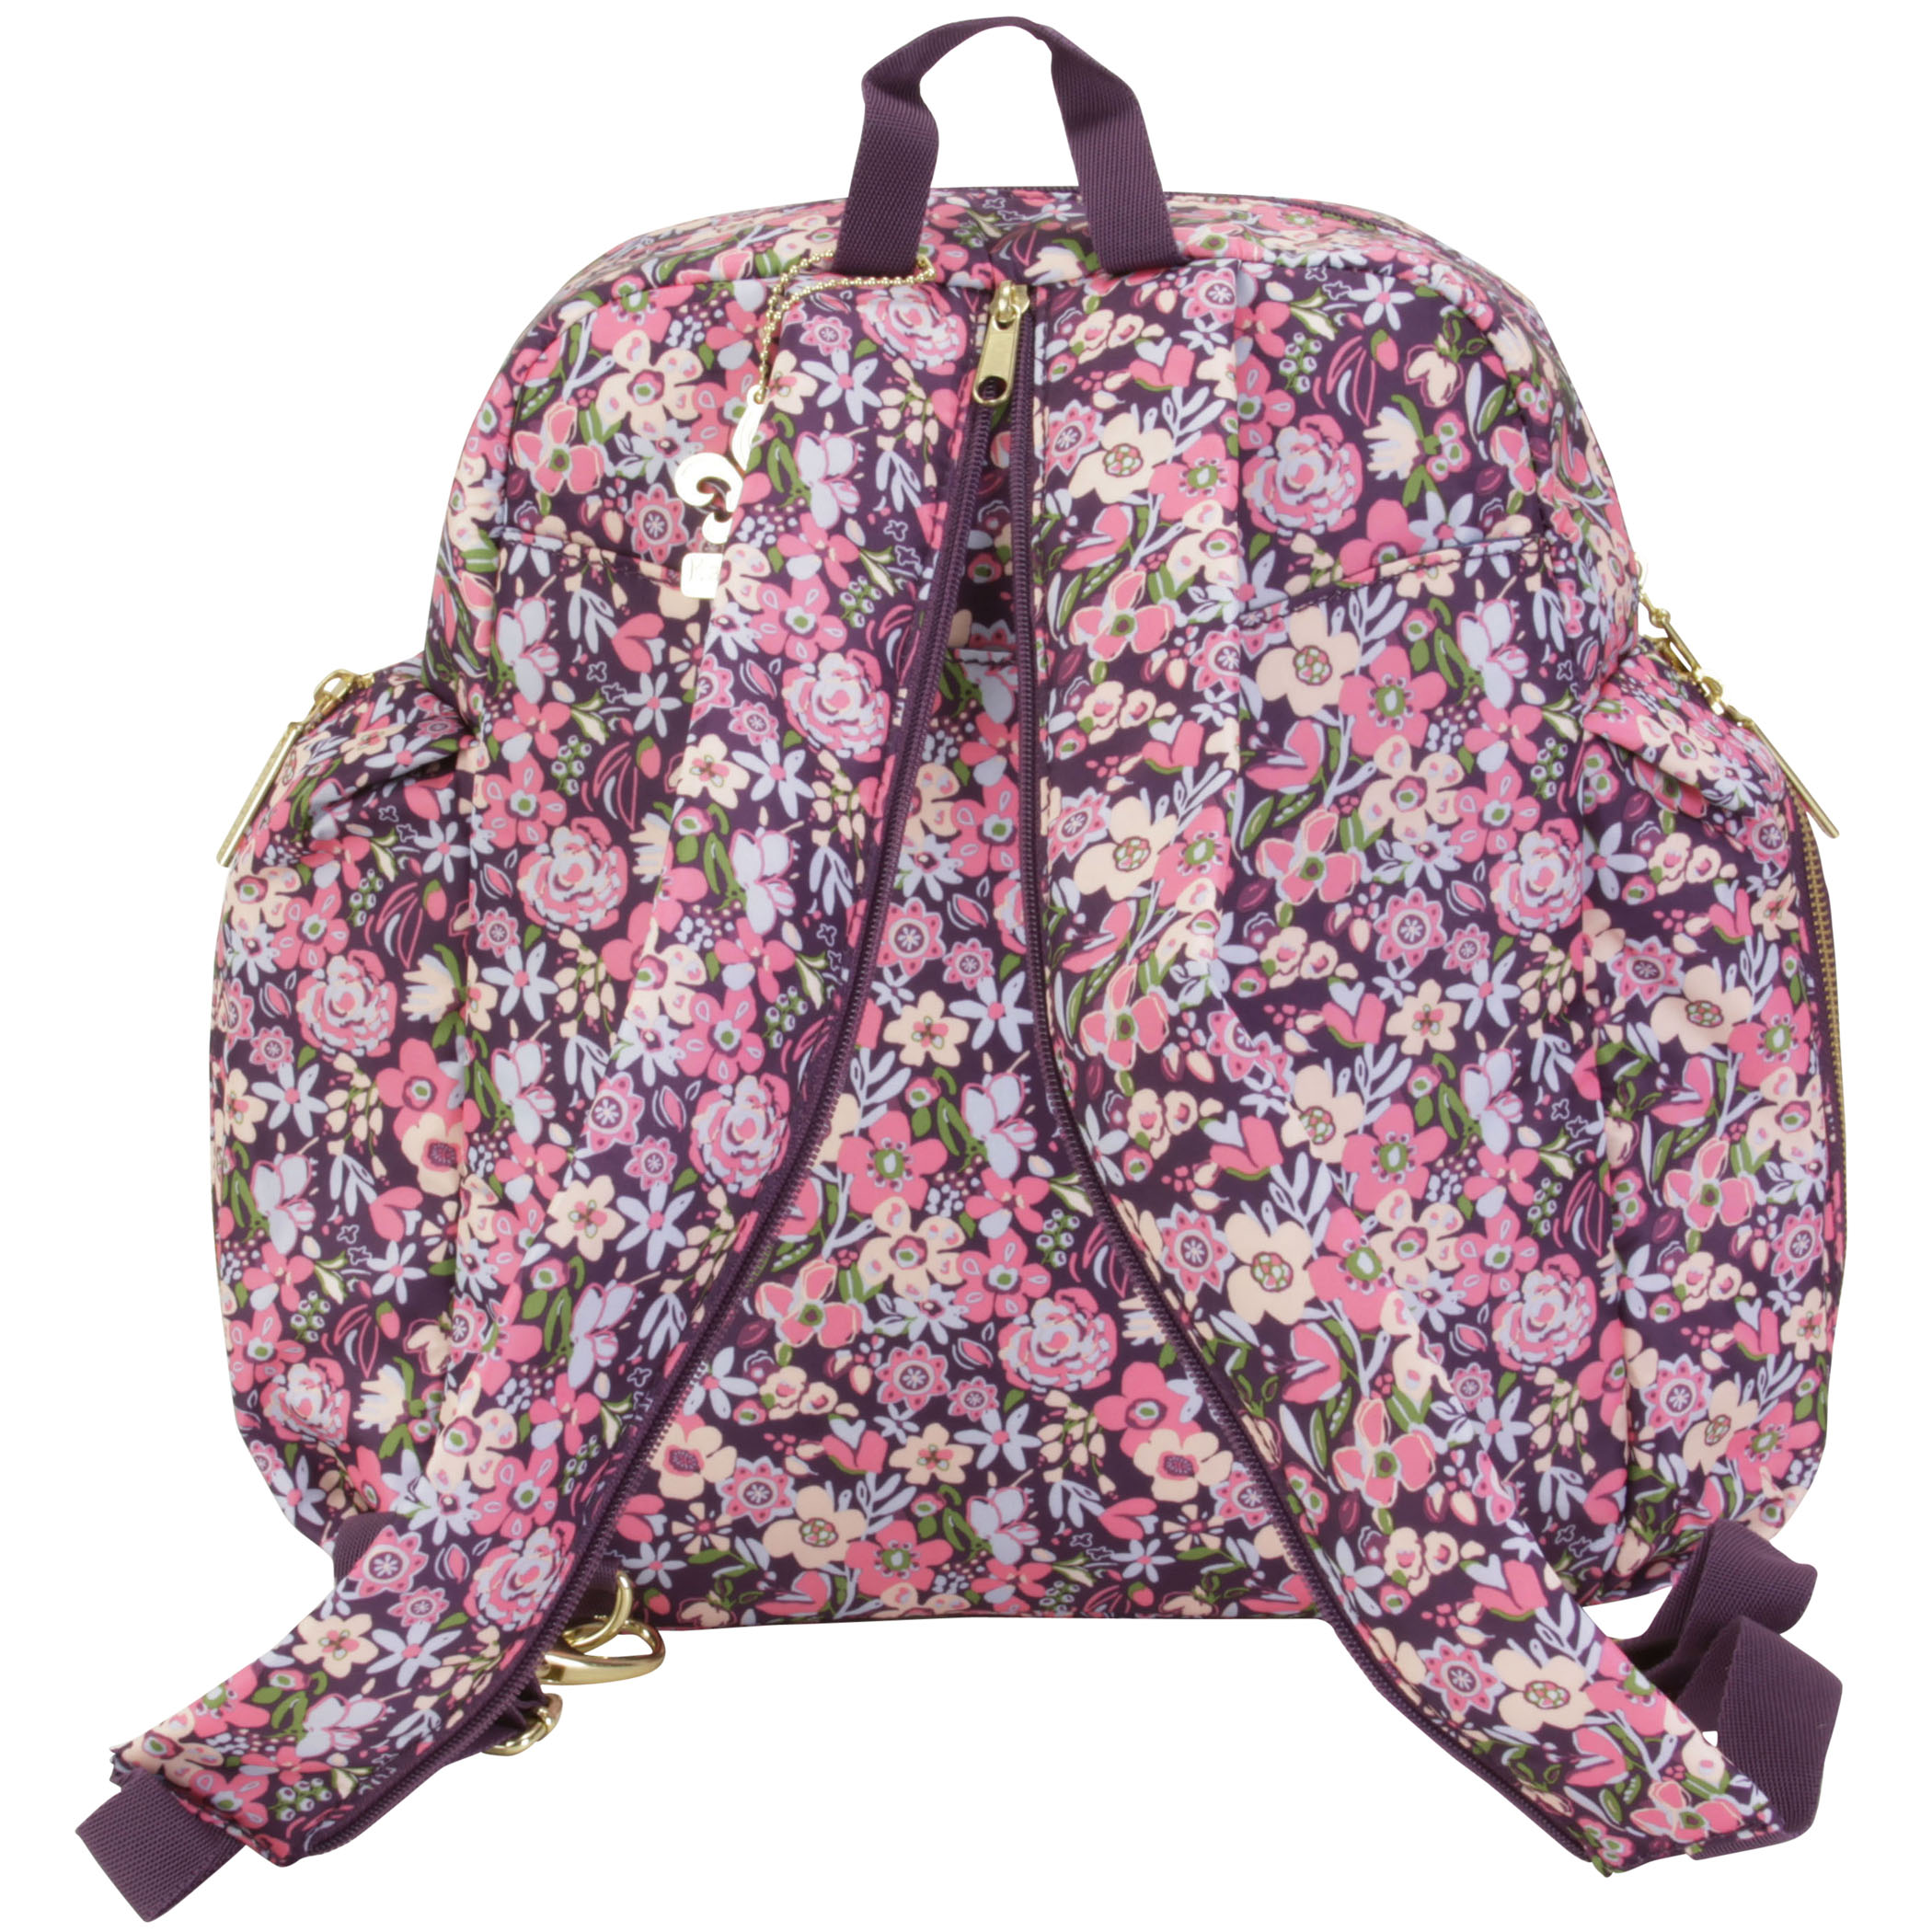 Kalencom Chicago Backpack / Urban Sling Diaper Bag in Blossoms - image 2 of 7